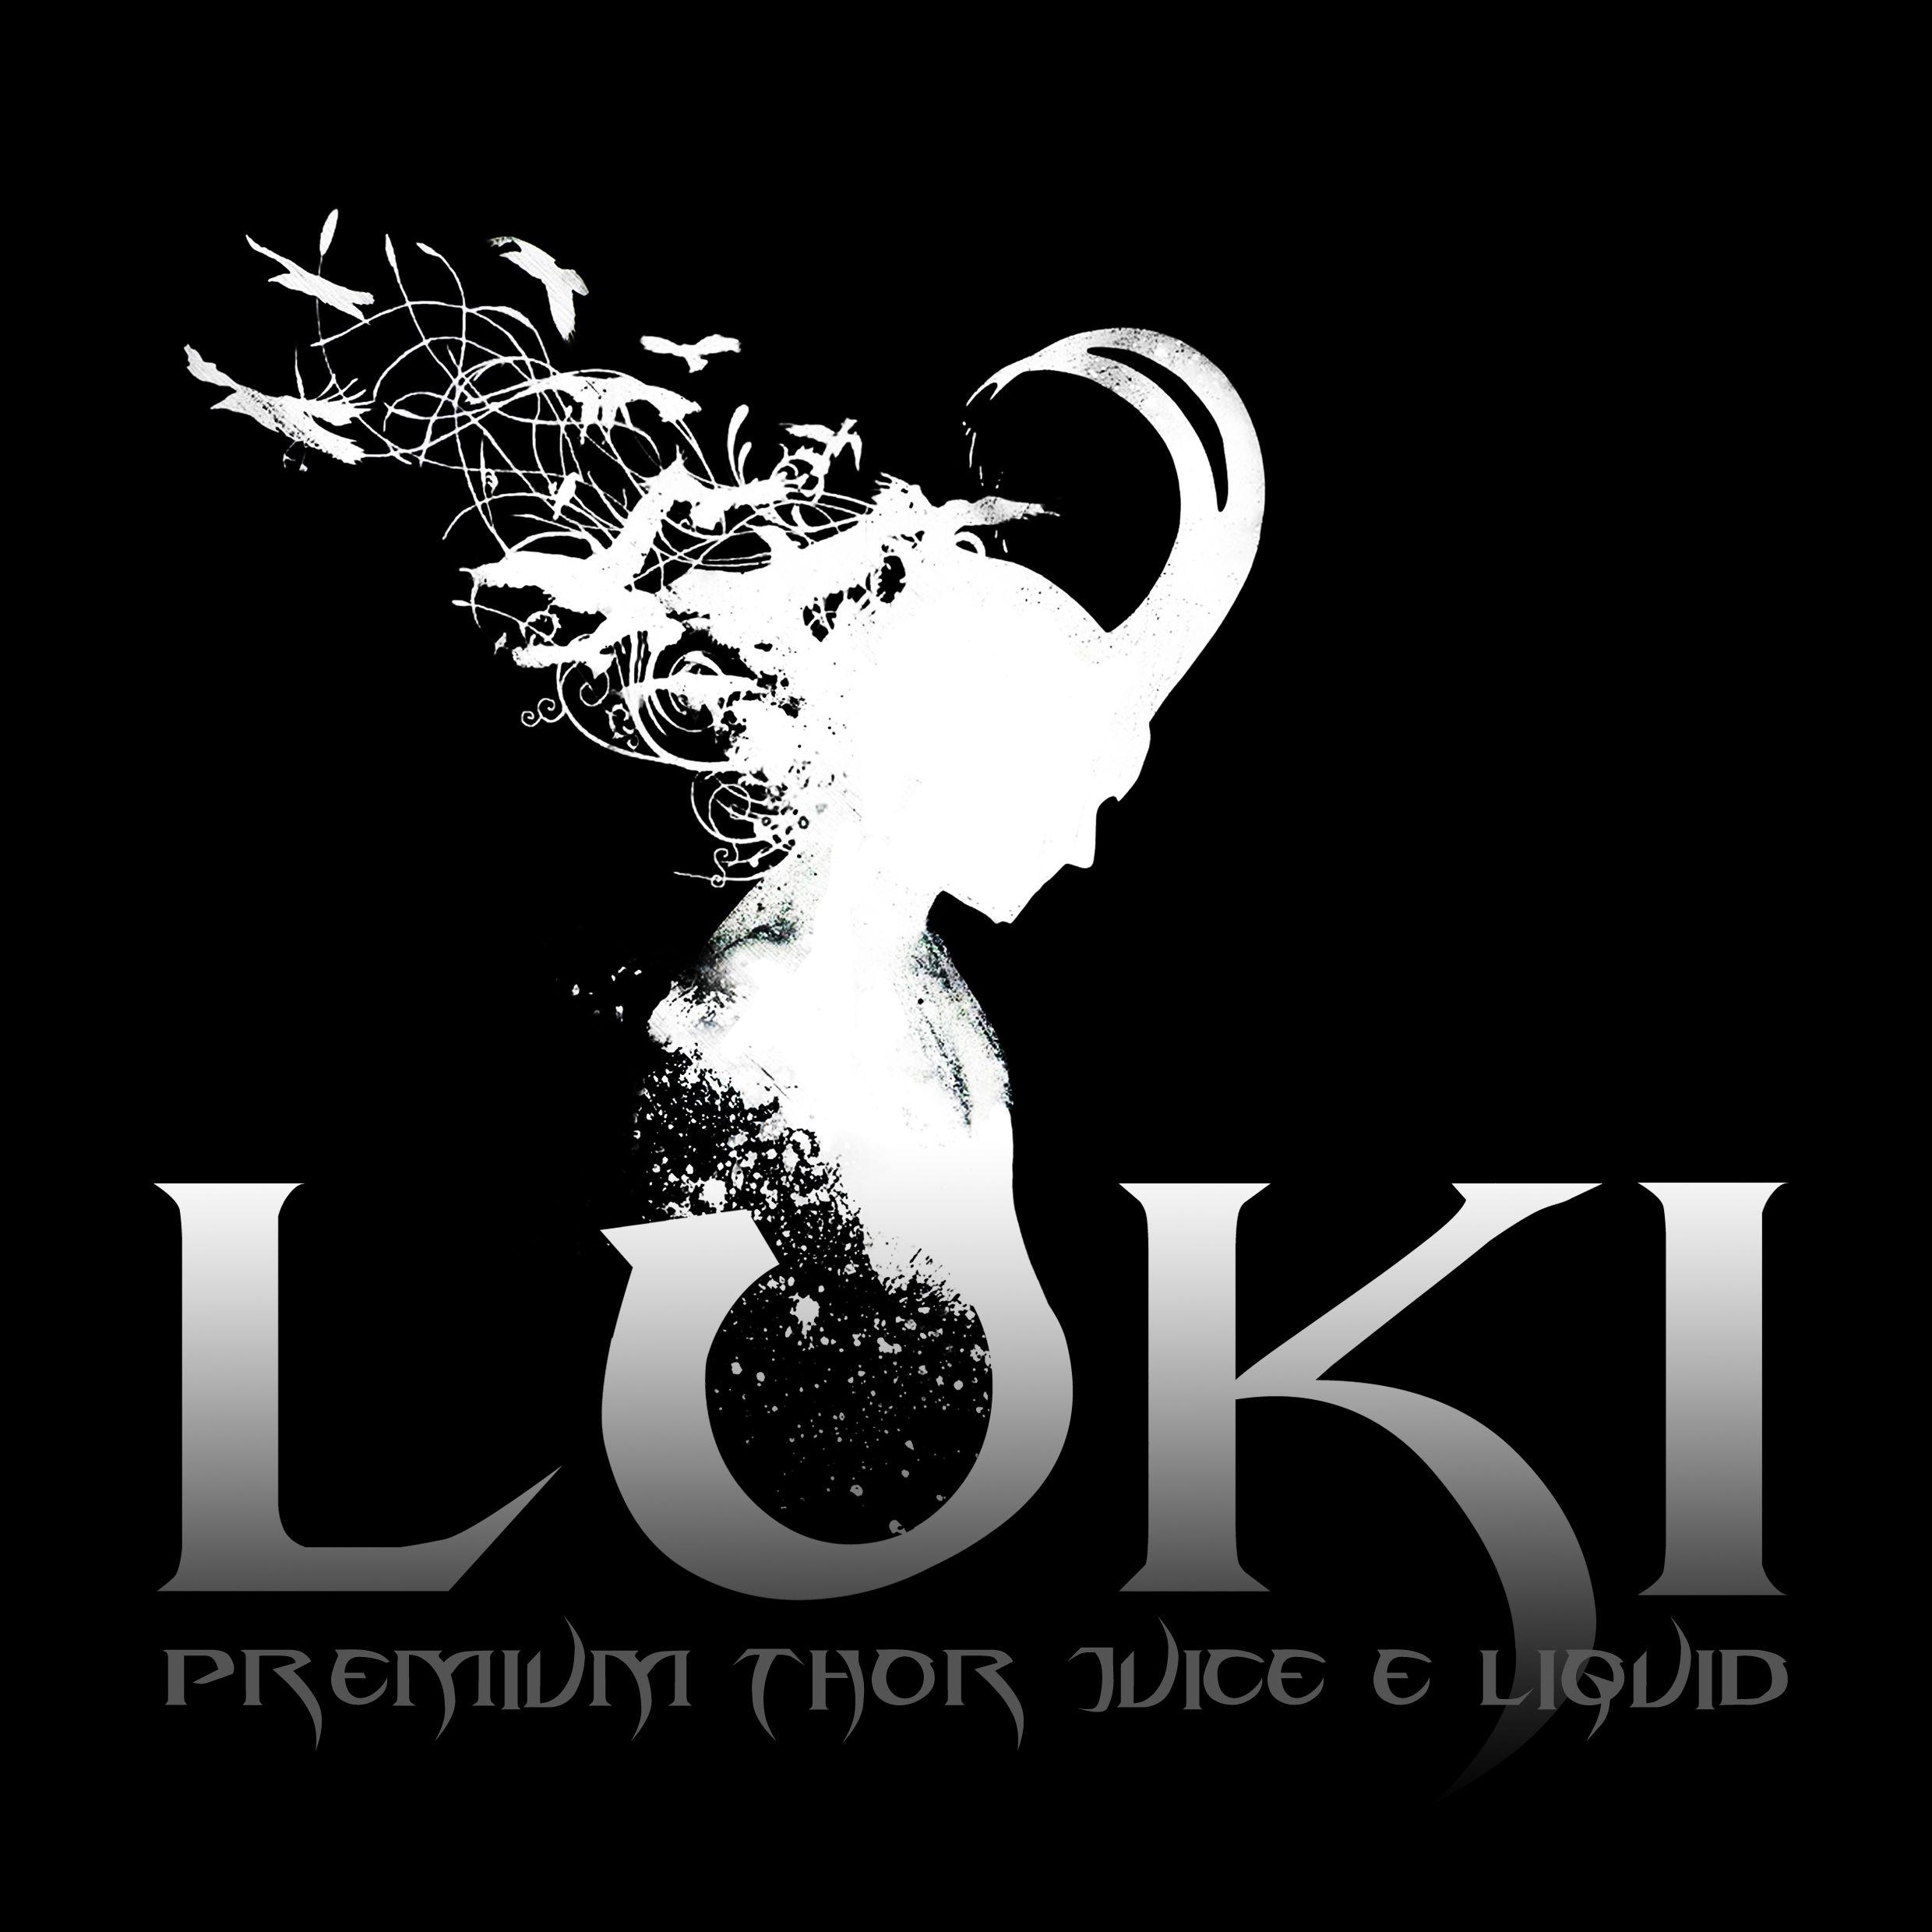 Black and White Loki Logo - Loki Logo Square | The Vapour Room